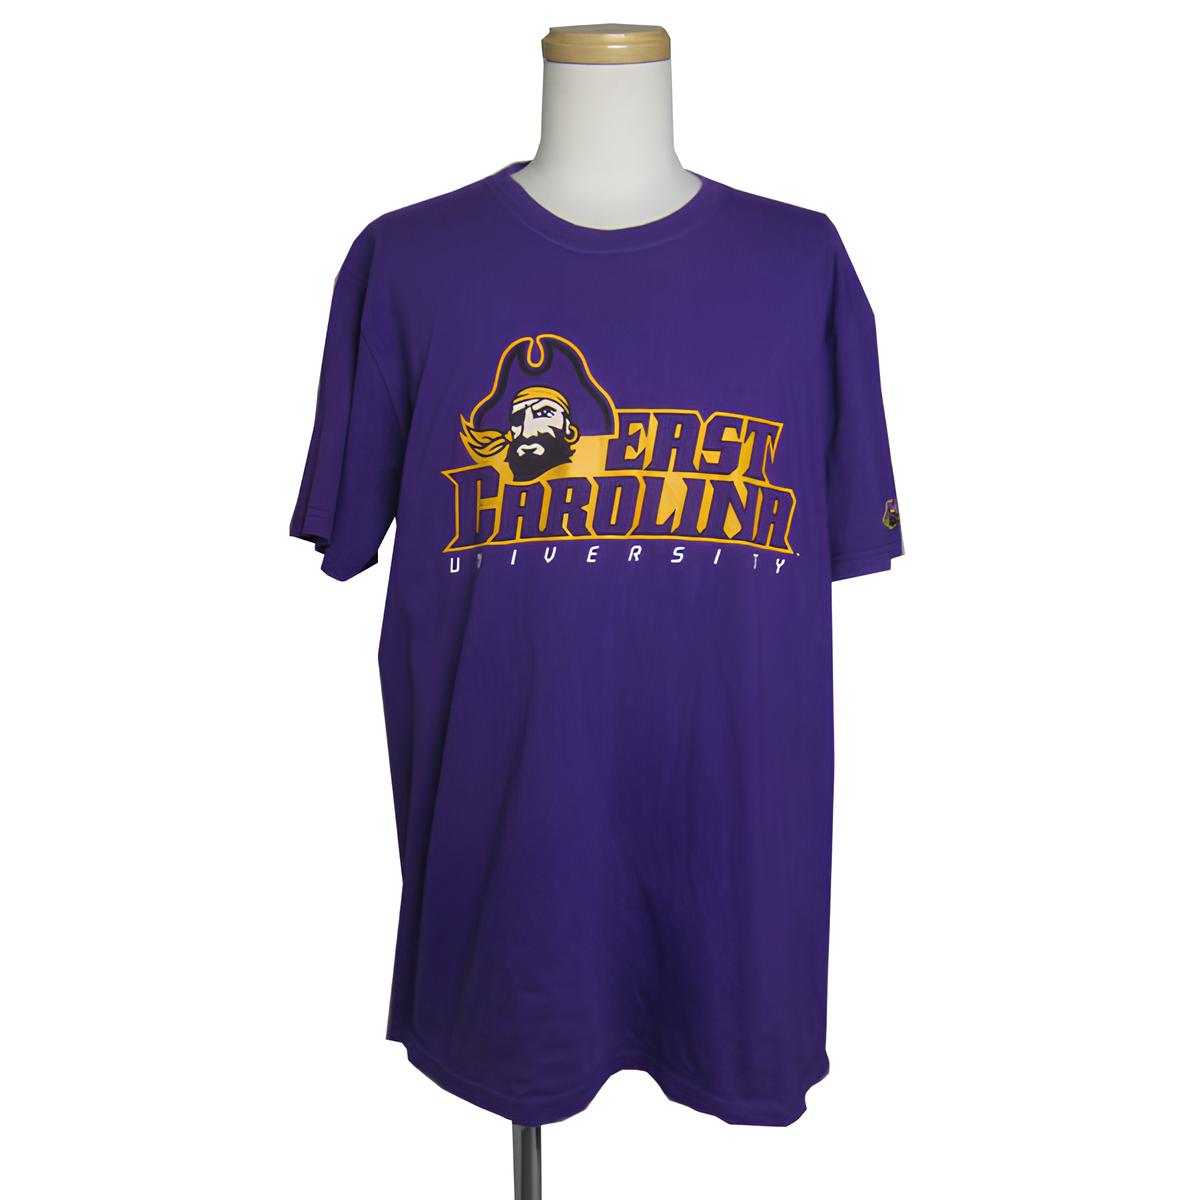 USA製 イースト・キャロライナ大学 プリントTシャツ サイズL 紫色